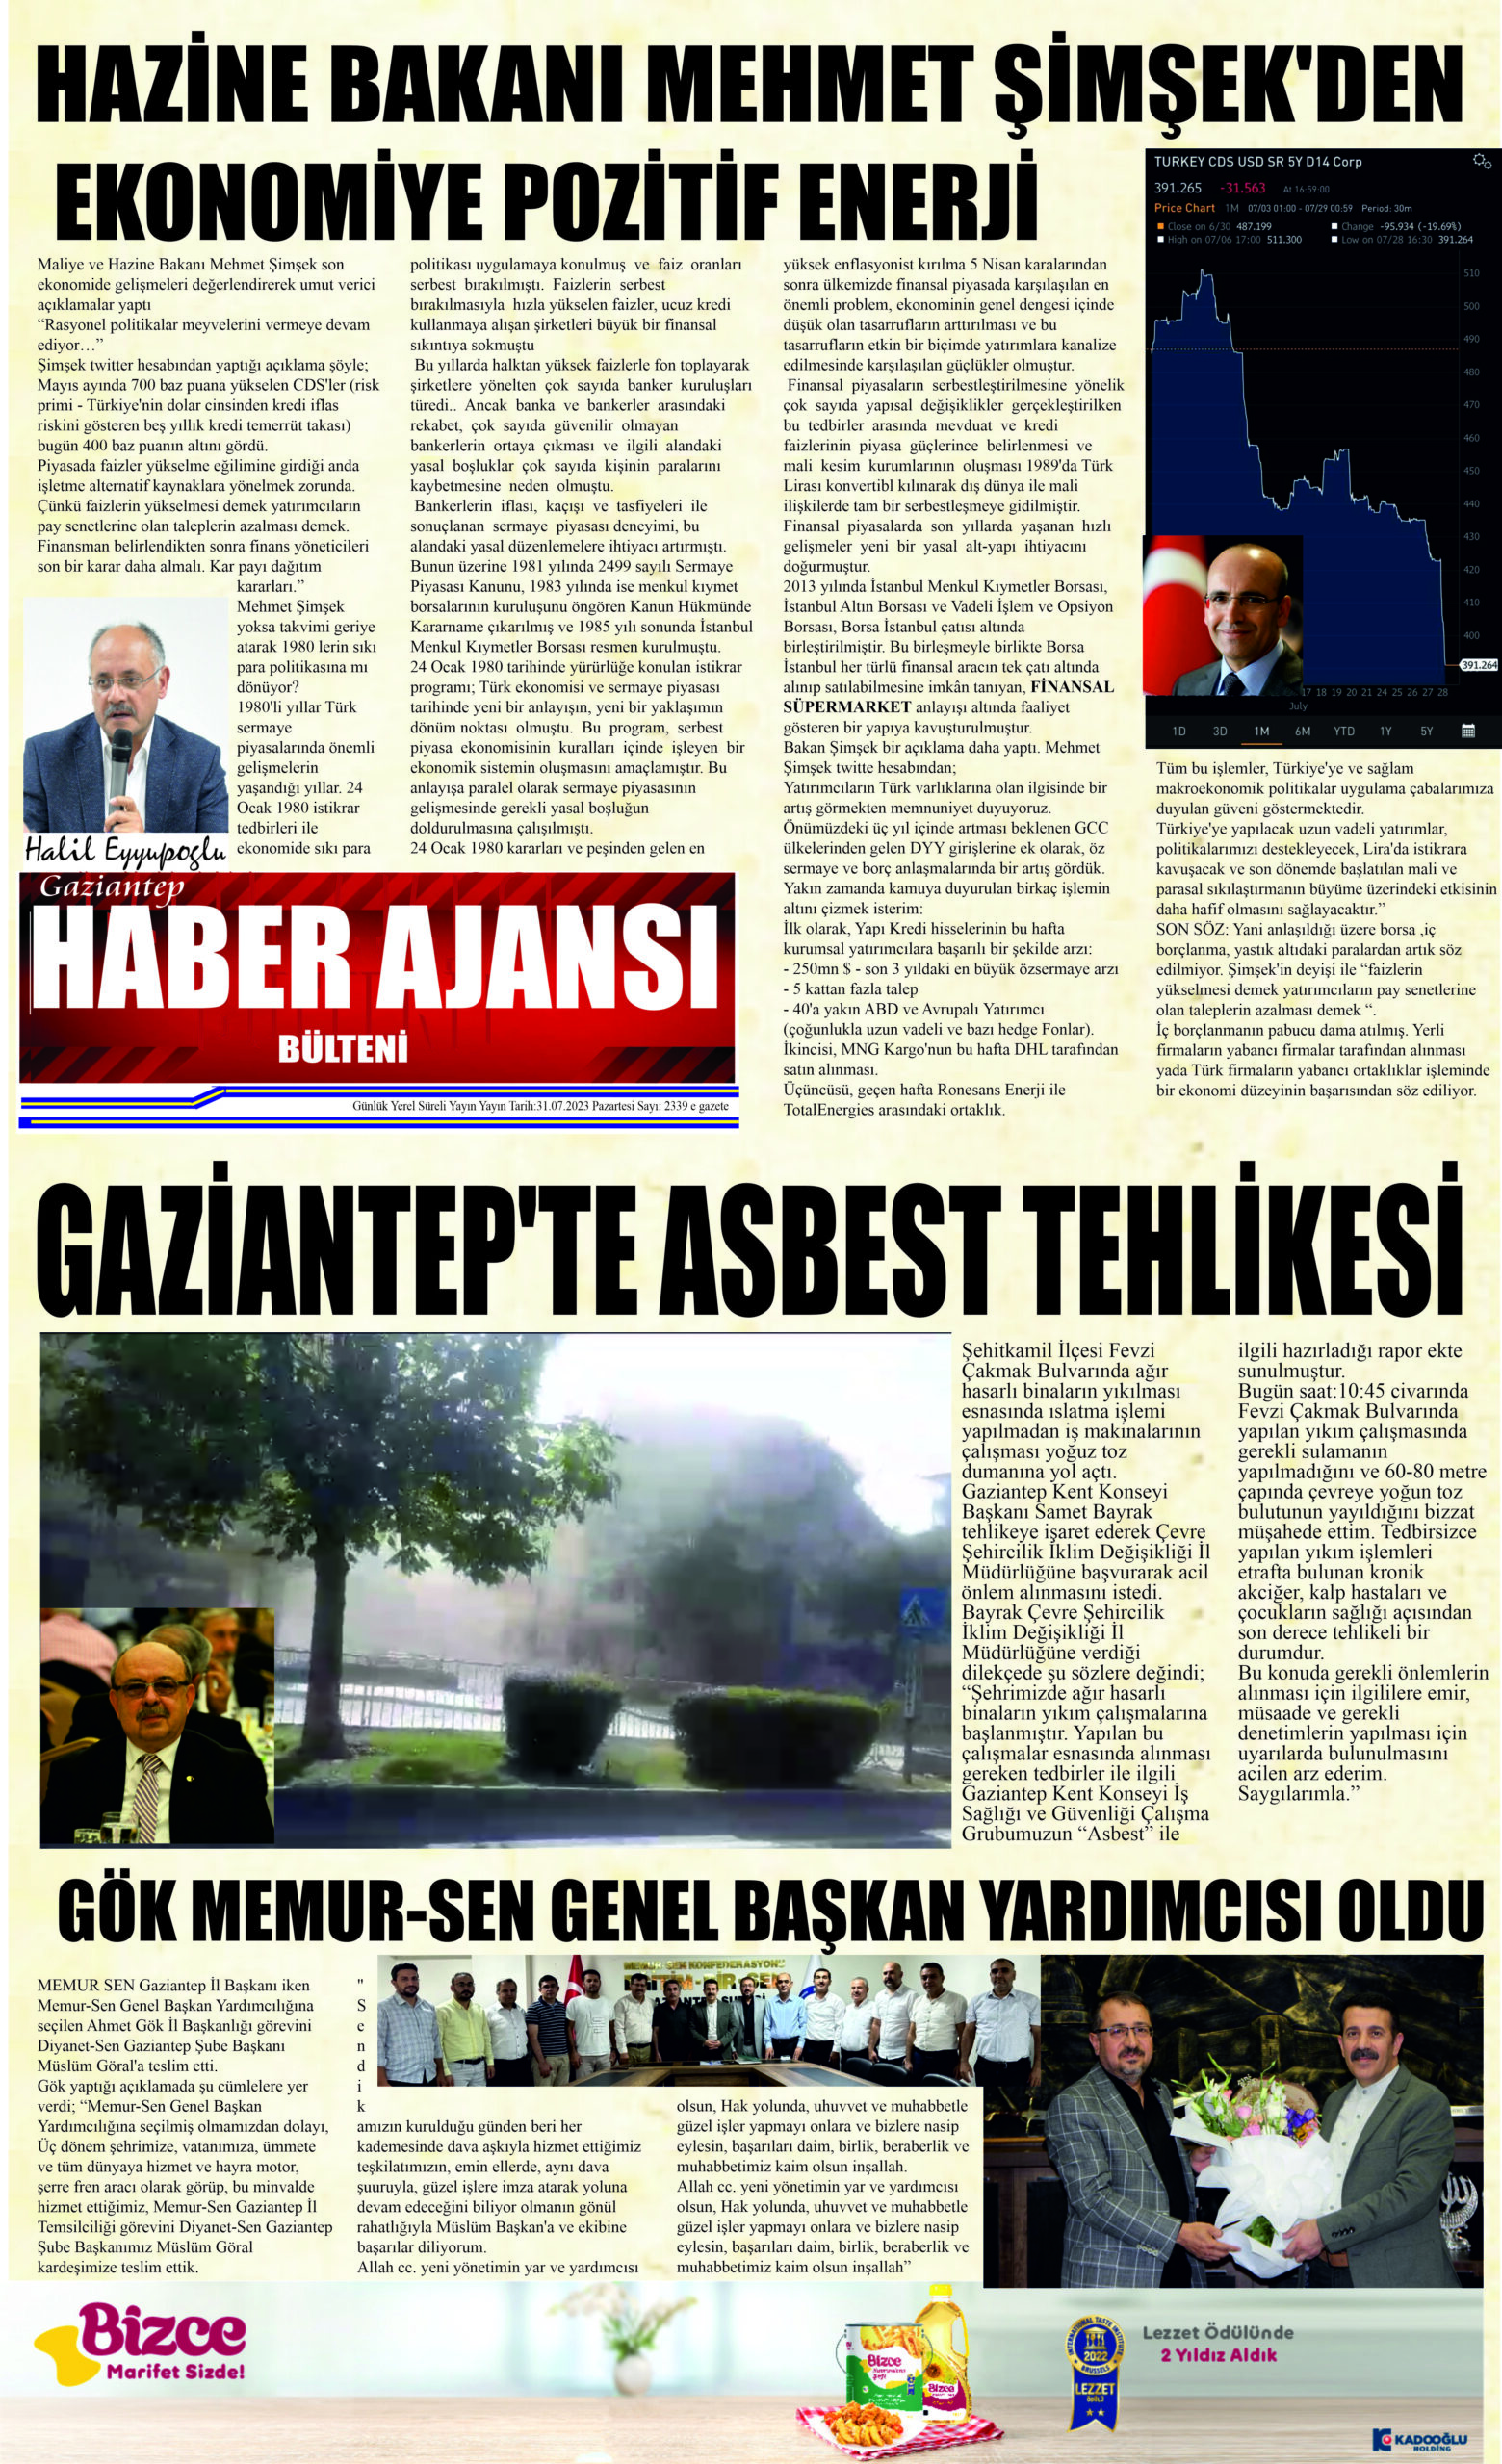 Gaziantep Haber Ajansı Bülteni Pazartesi 31.07.2023 e gazete